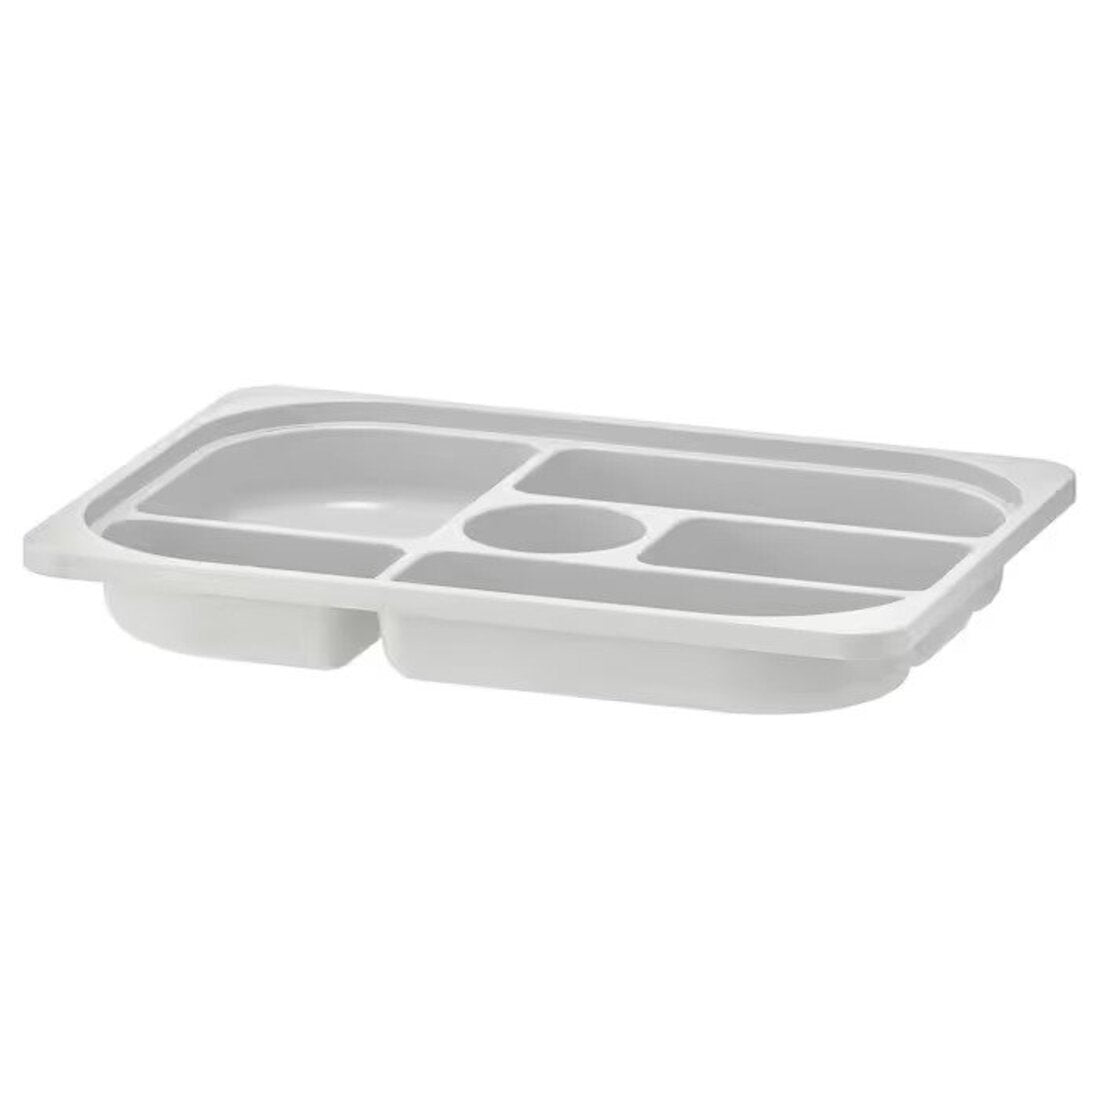 FÅNGGRÖDA Insert with compartments, light gray, 11 ¾x11 ¾x4 ¼ - IKEA